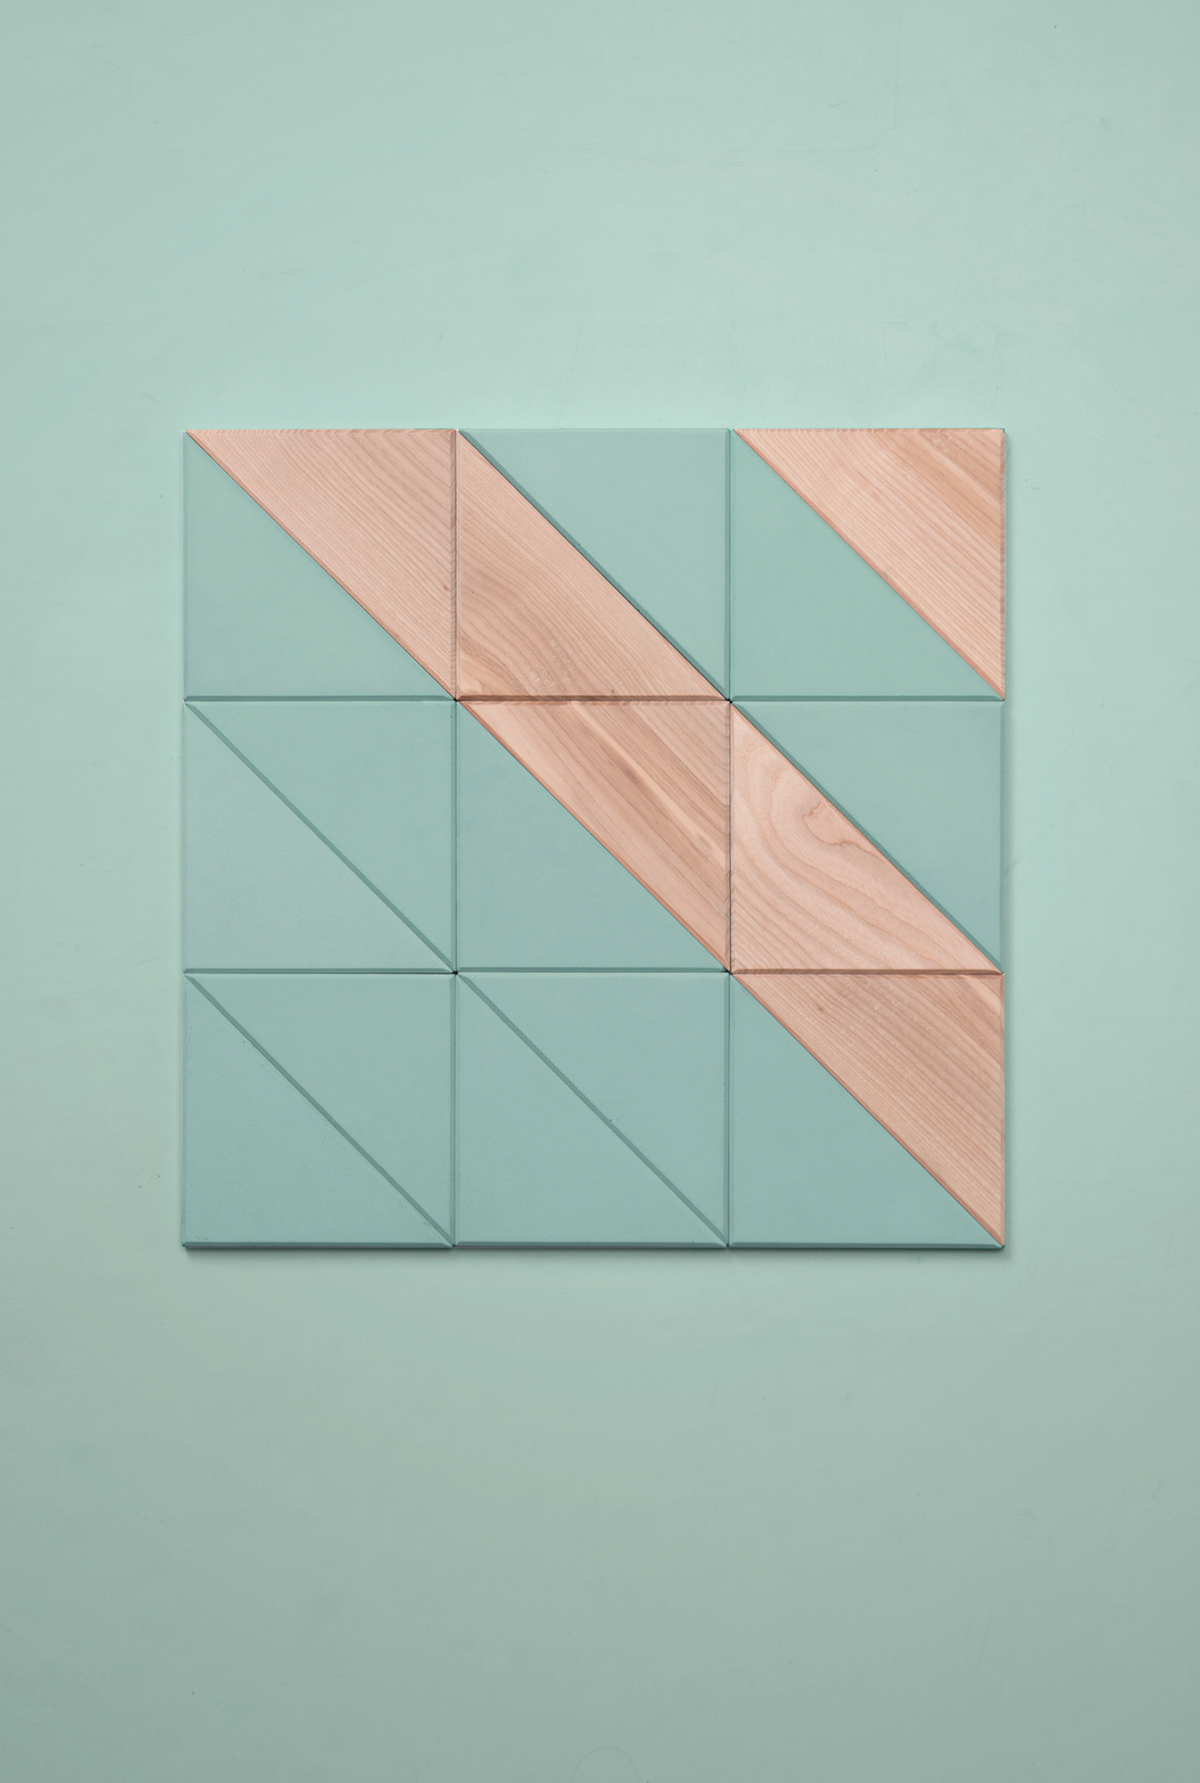 tile concrete wood LOFT minimalist fild design wall FLOOR triangle delata color mint pink grey